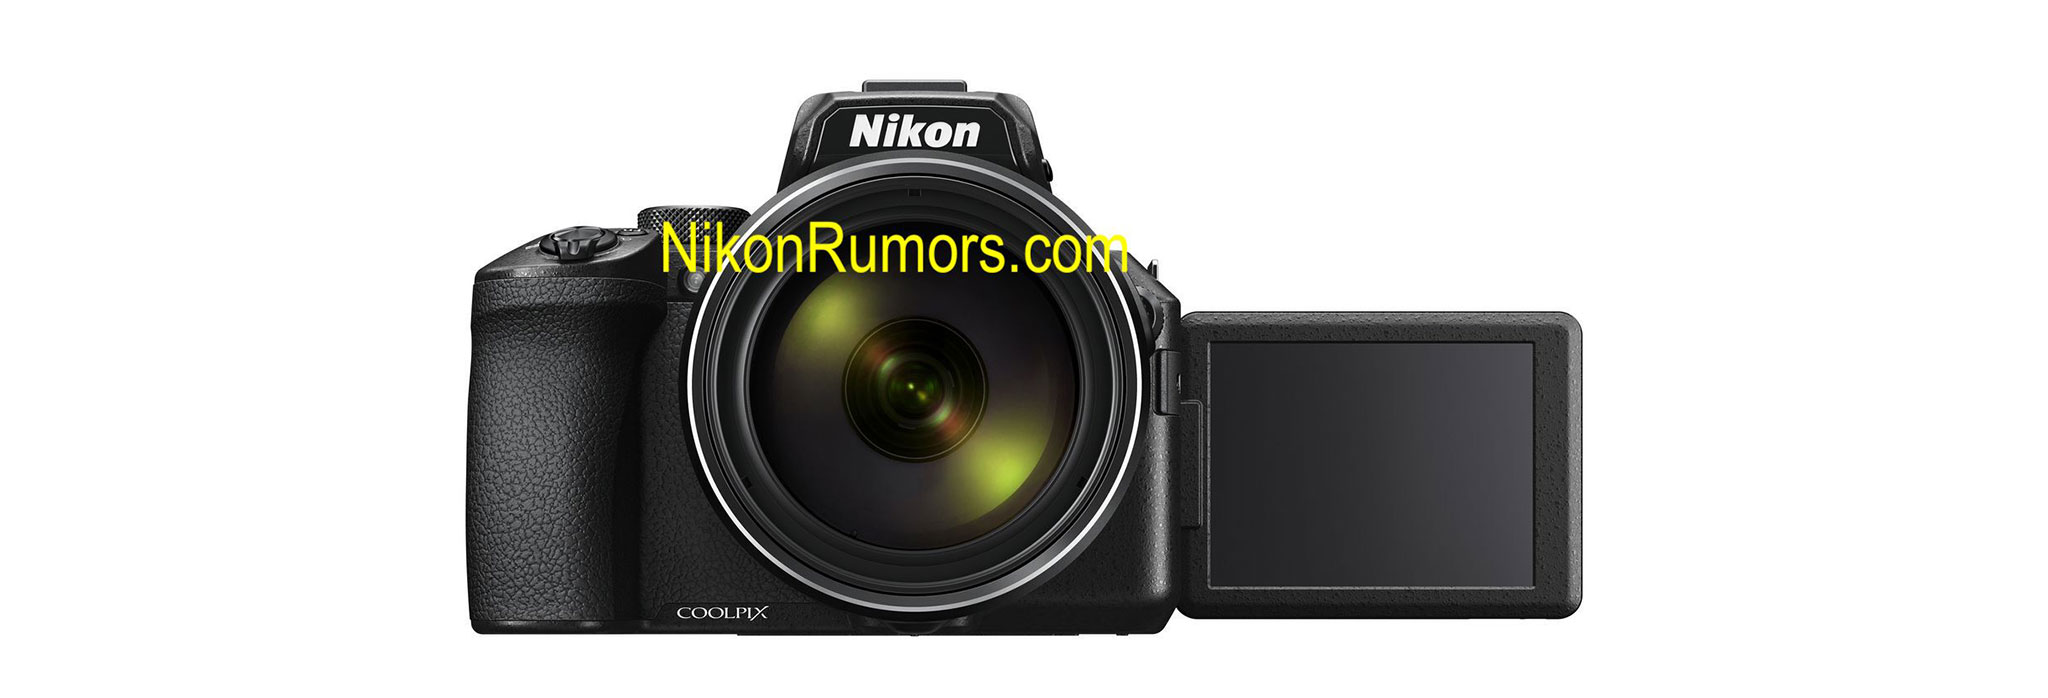 Nikon-Coolpix-P950-camera-2.jpg